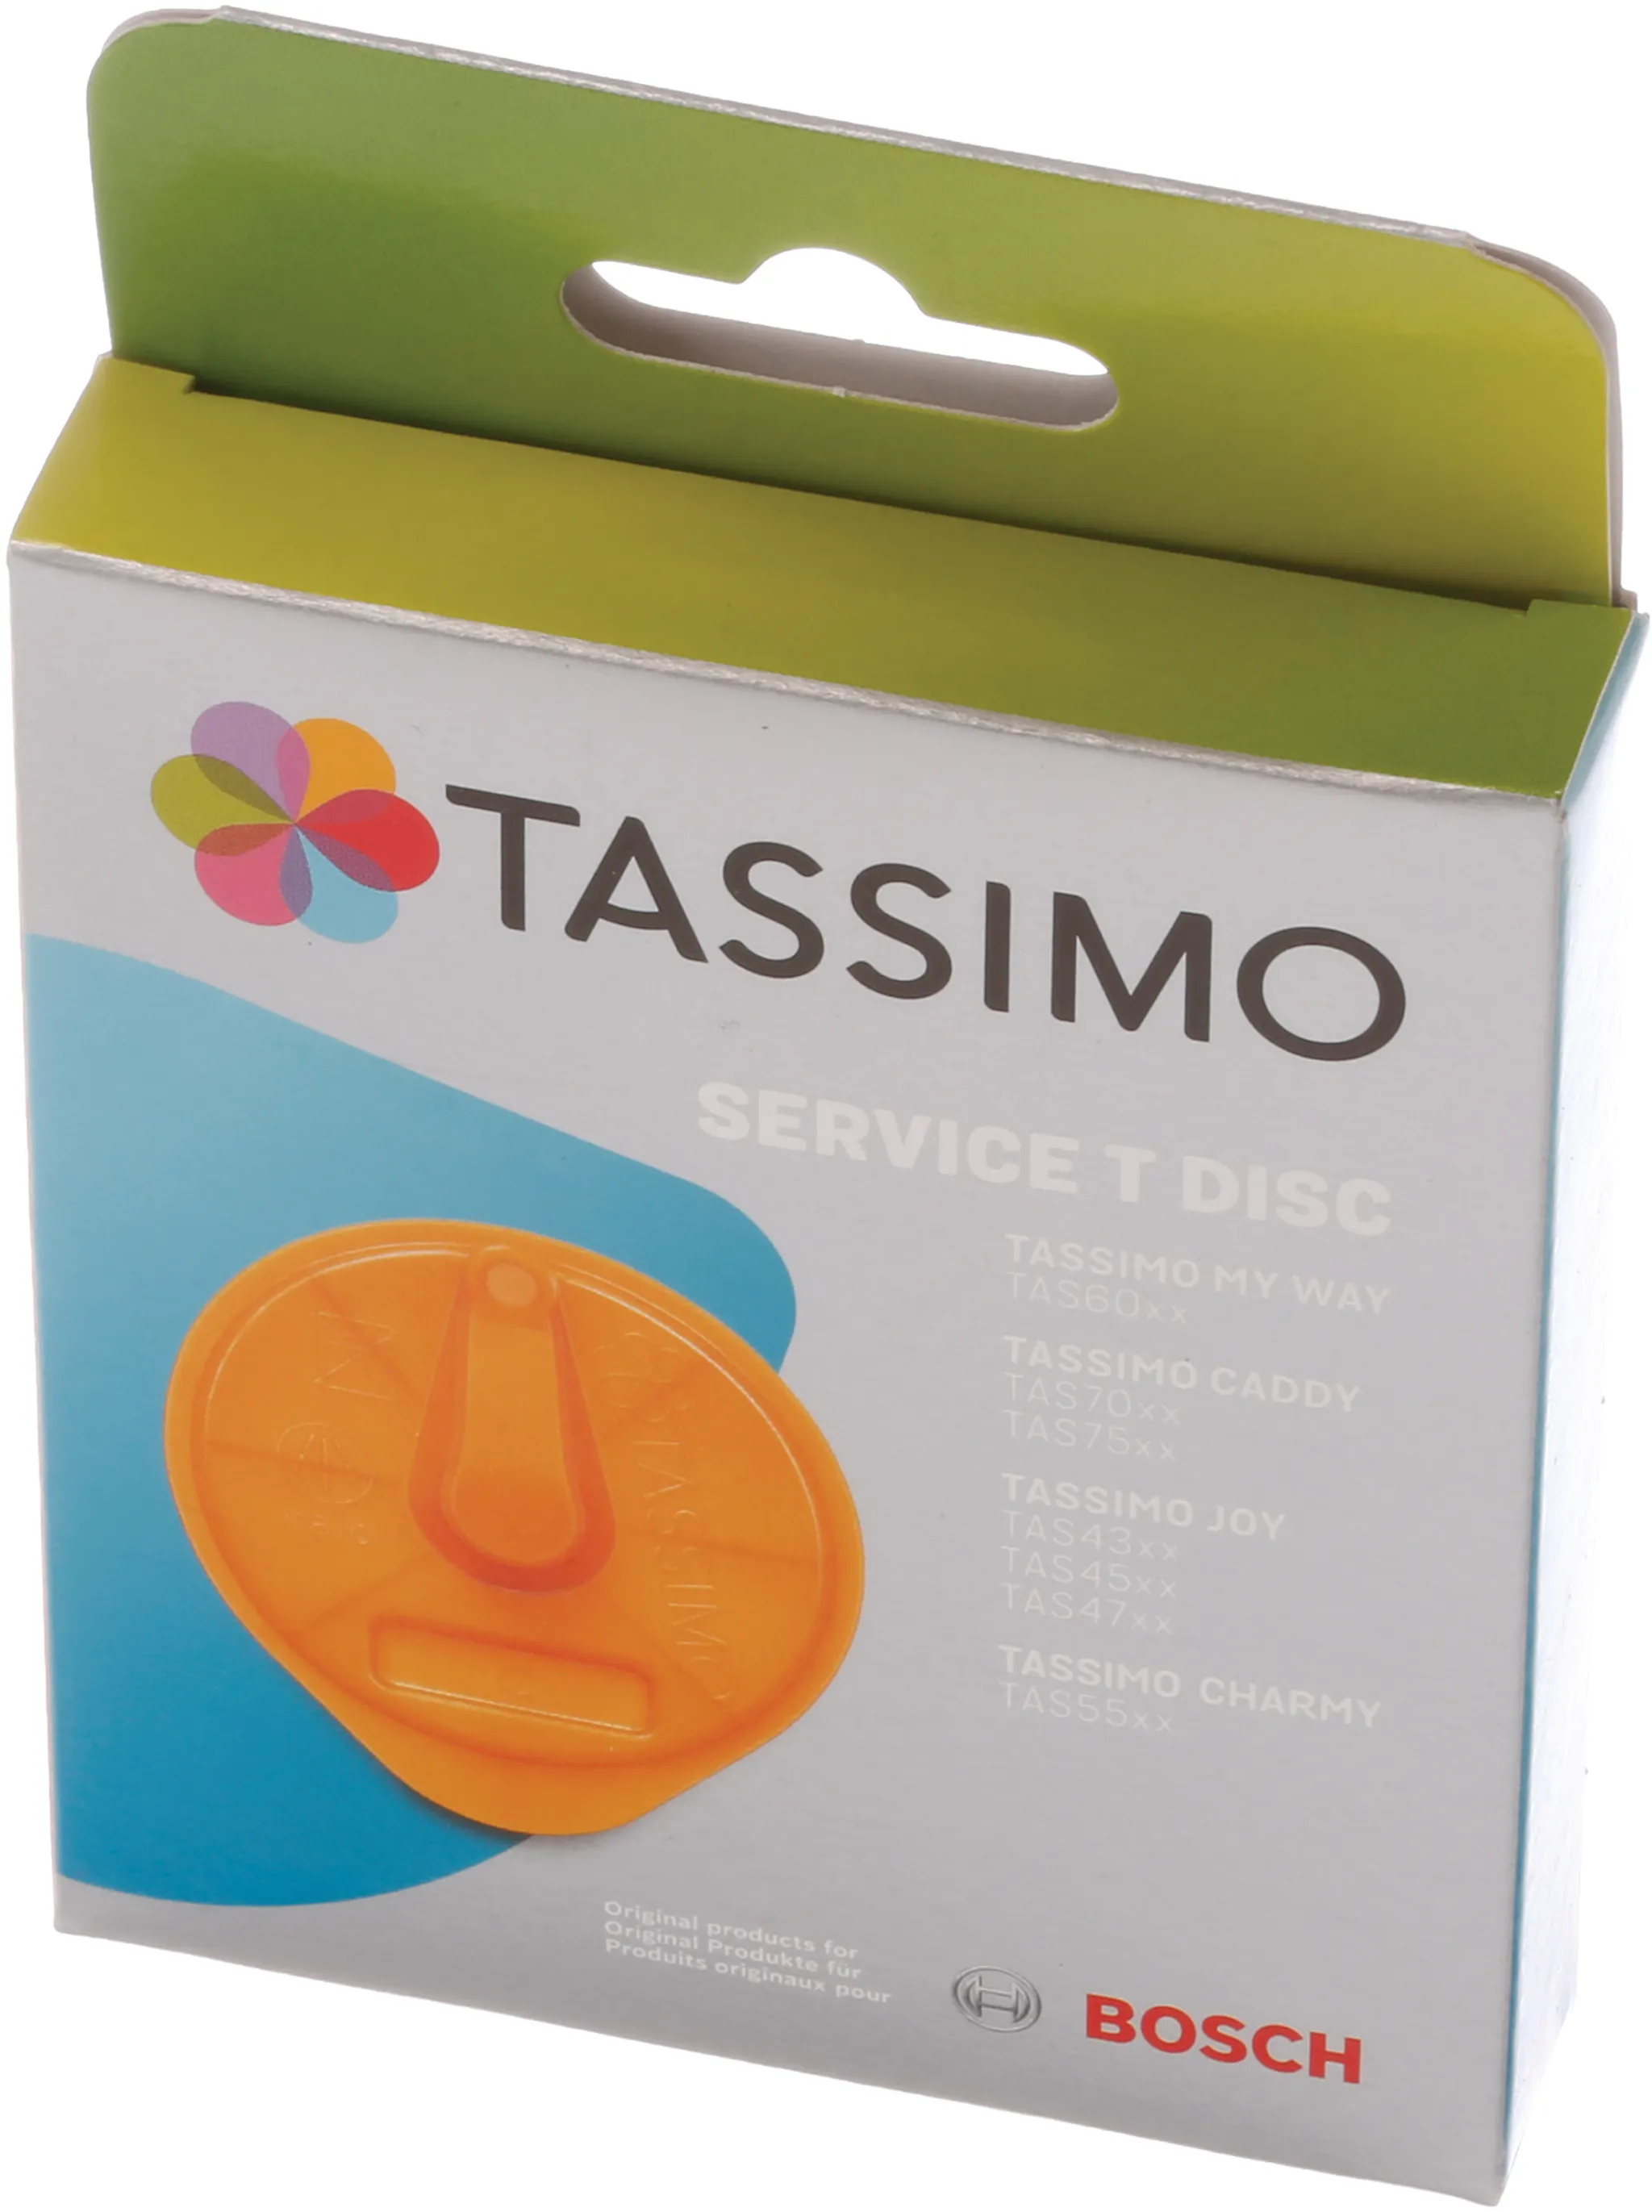 Disque nettoyage t-disc tassimo 17001491 pour Expresso Bosch